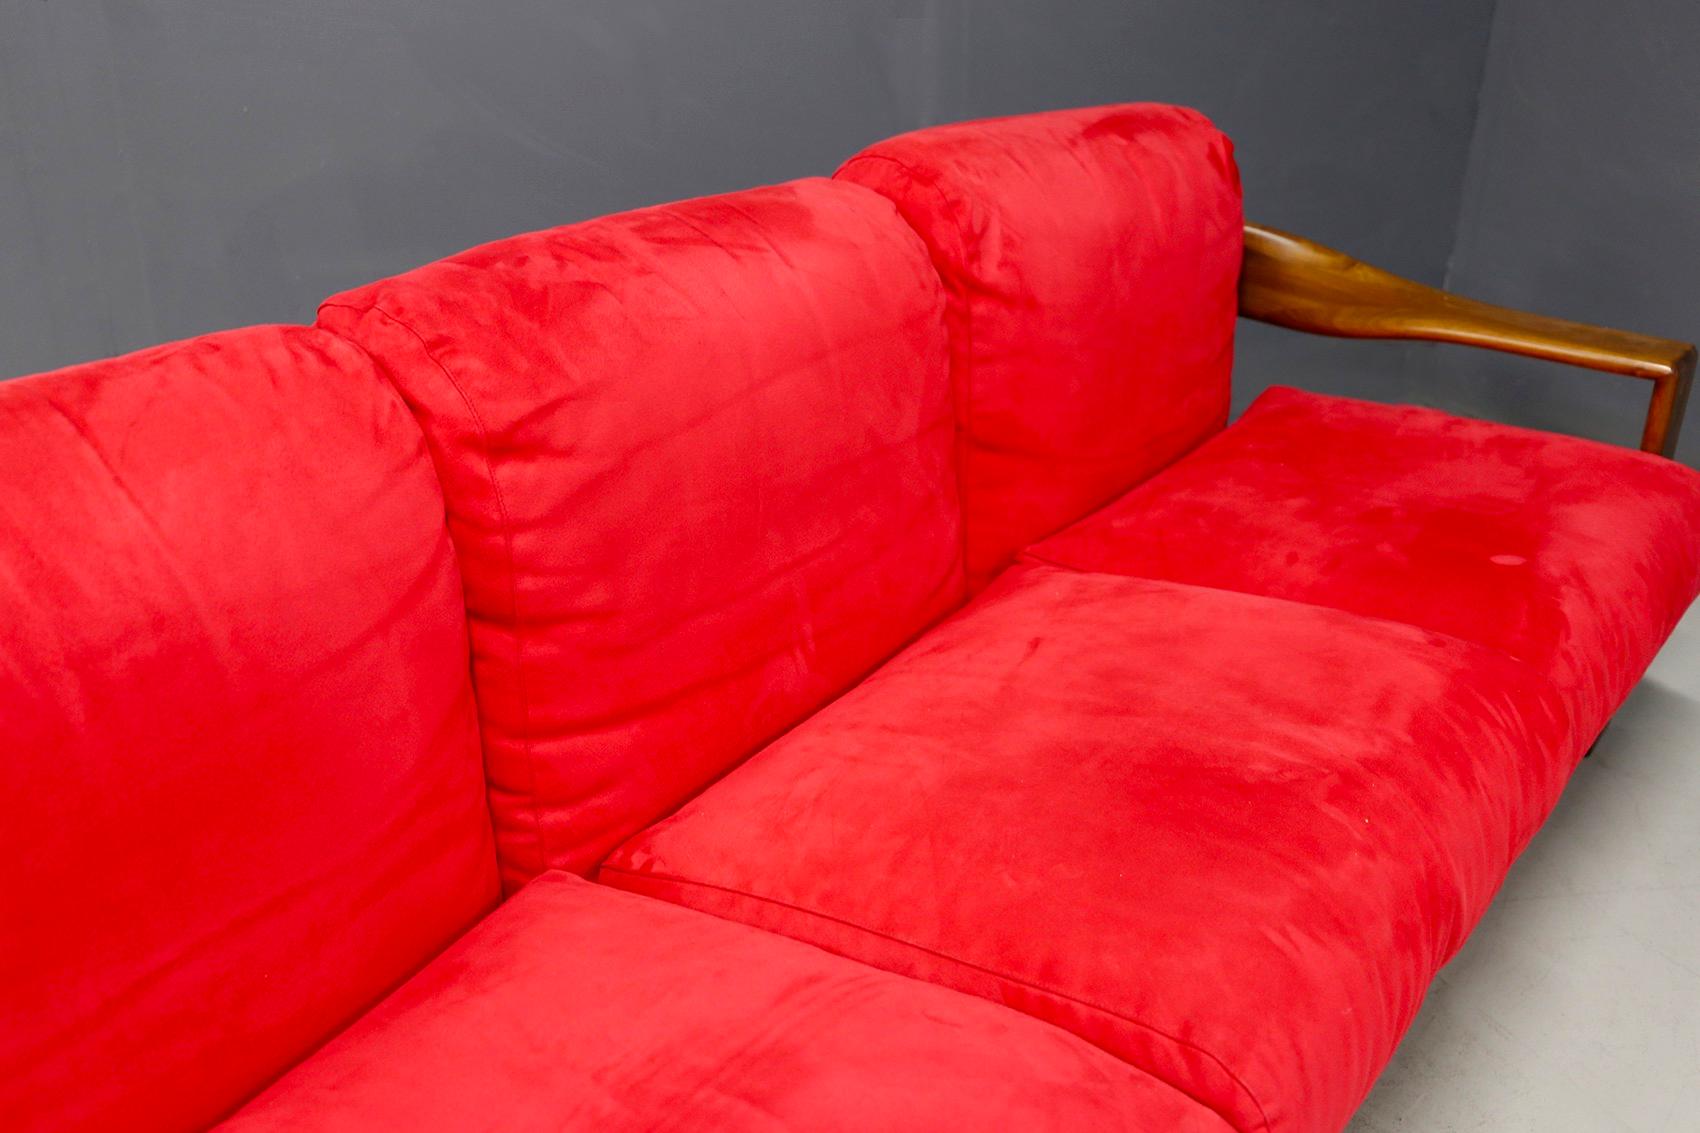 Afra & Tobia Scarpa Modern Sofa in Walnut and Fabric 1980s 3